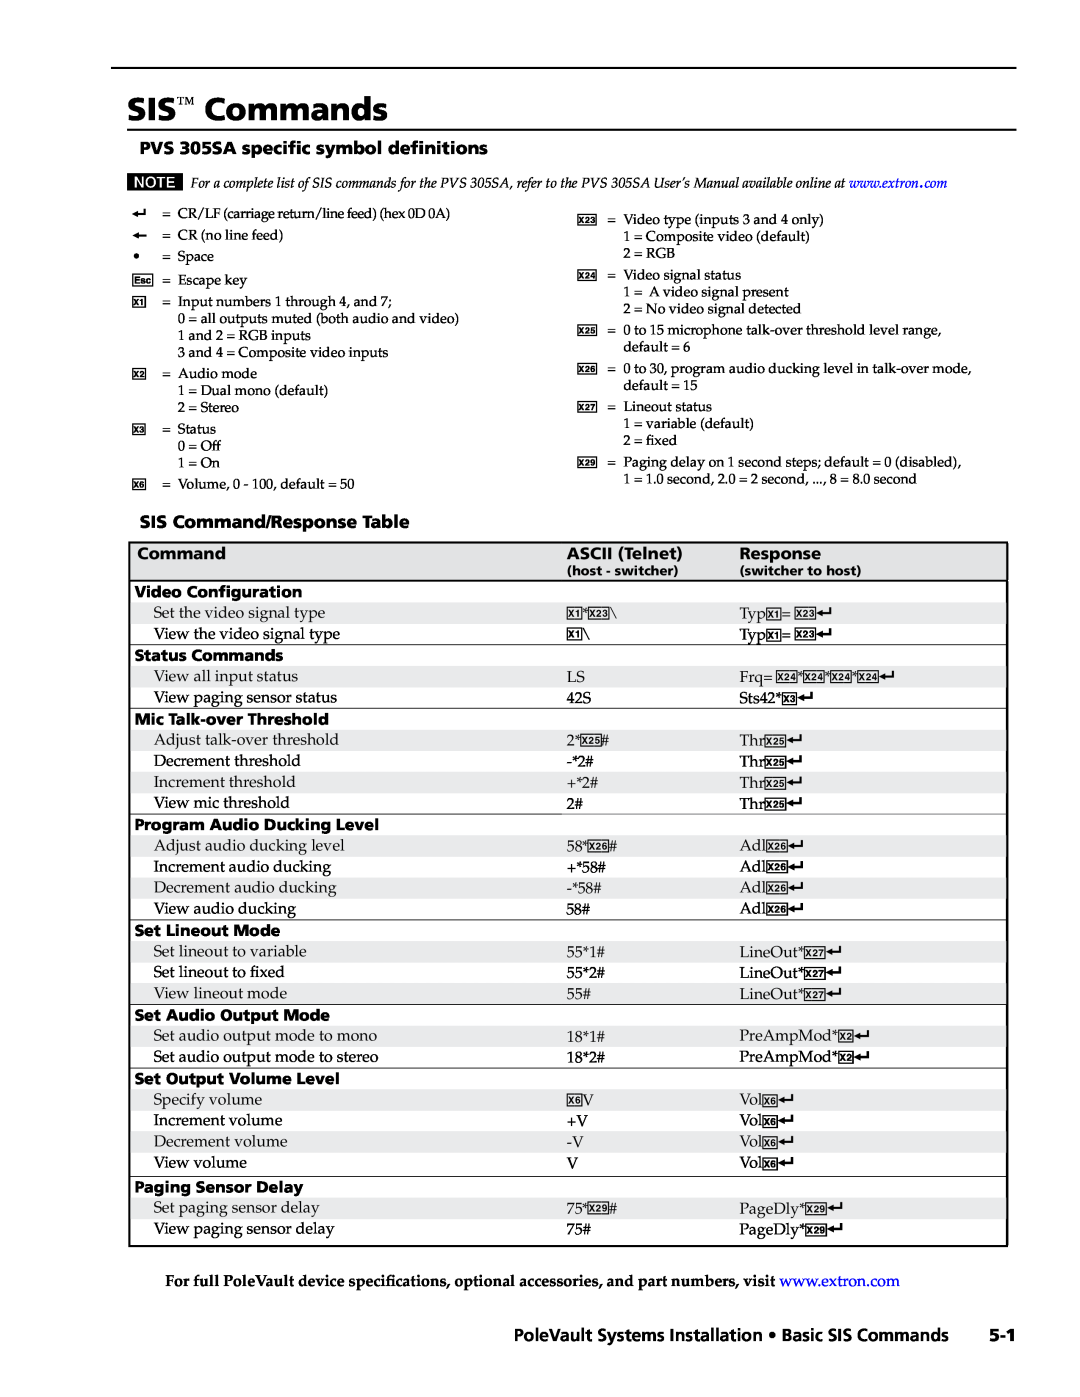 Extron electronic manual SIS Commands, PVS 305SA specific symbol definitions, SIS Command/Response Table, ASCII Telnet 